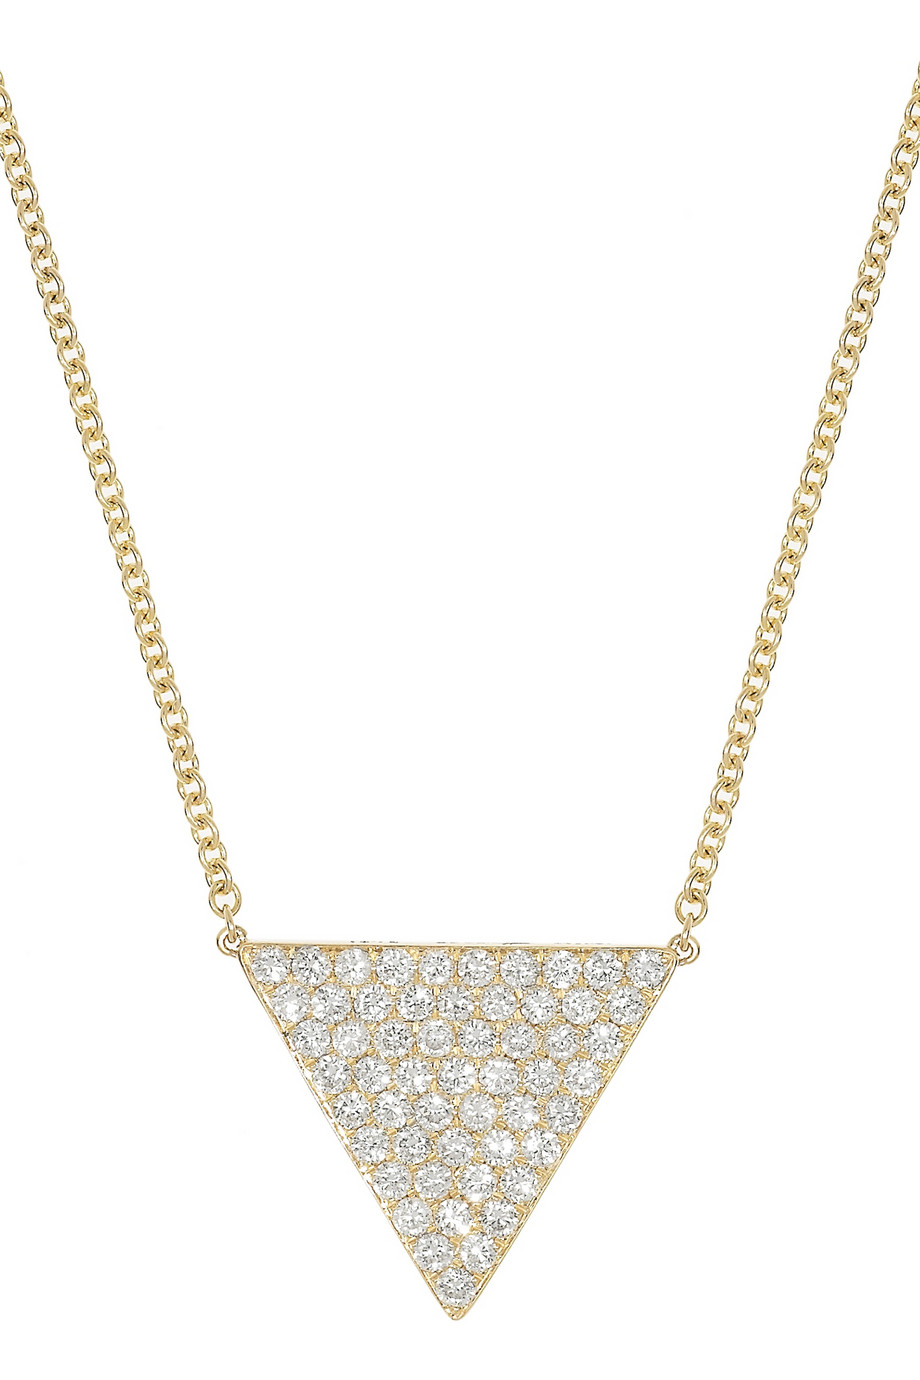 Anita Ko Triangle 18karat Gold Diamond Necklace in Metallic - Lyst